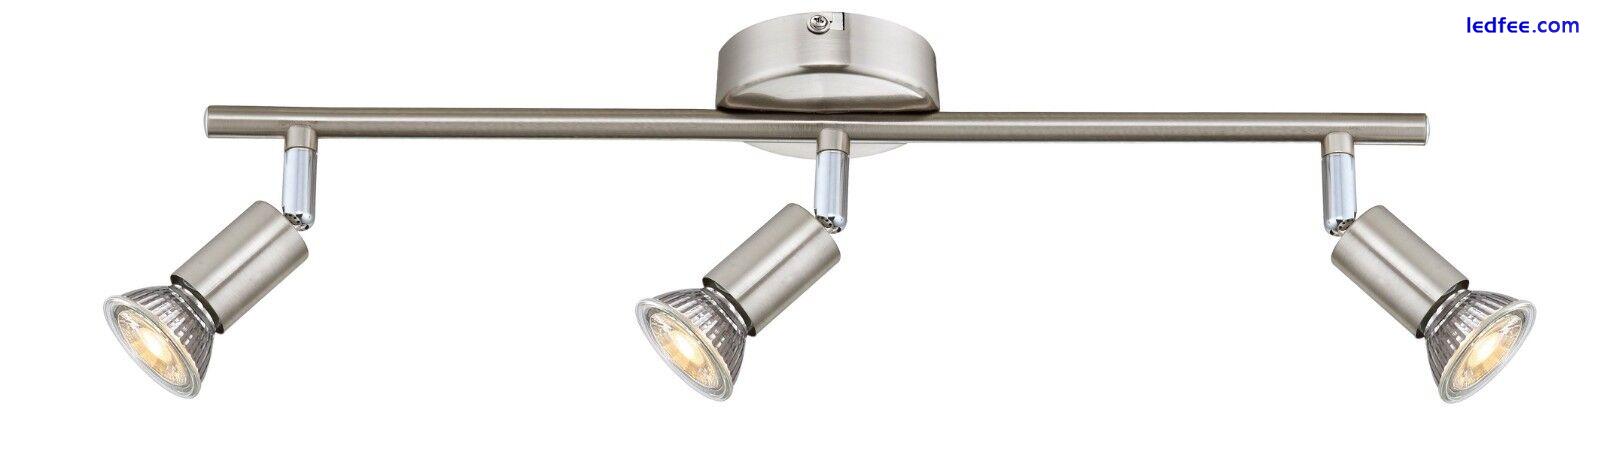 3 Way Modern Ceiling Spotlights GU10 Bulbs Adjustable LED Kitchen Bar Fitting 3 